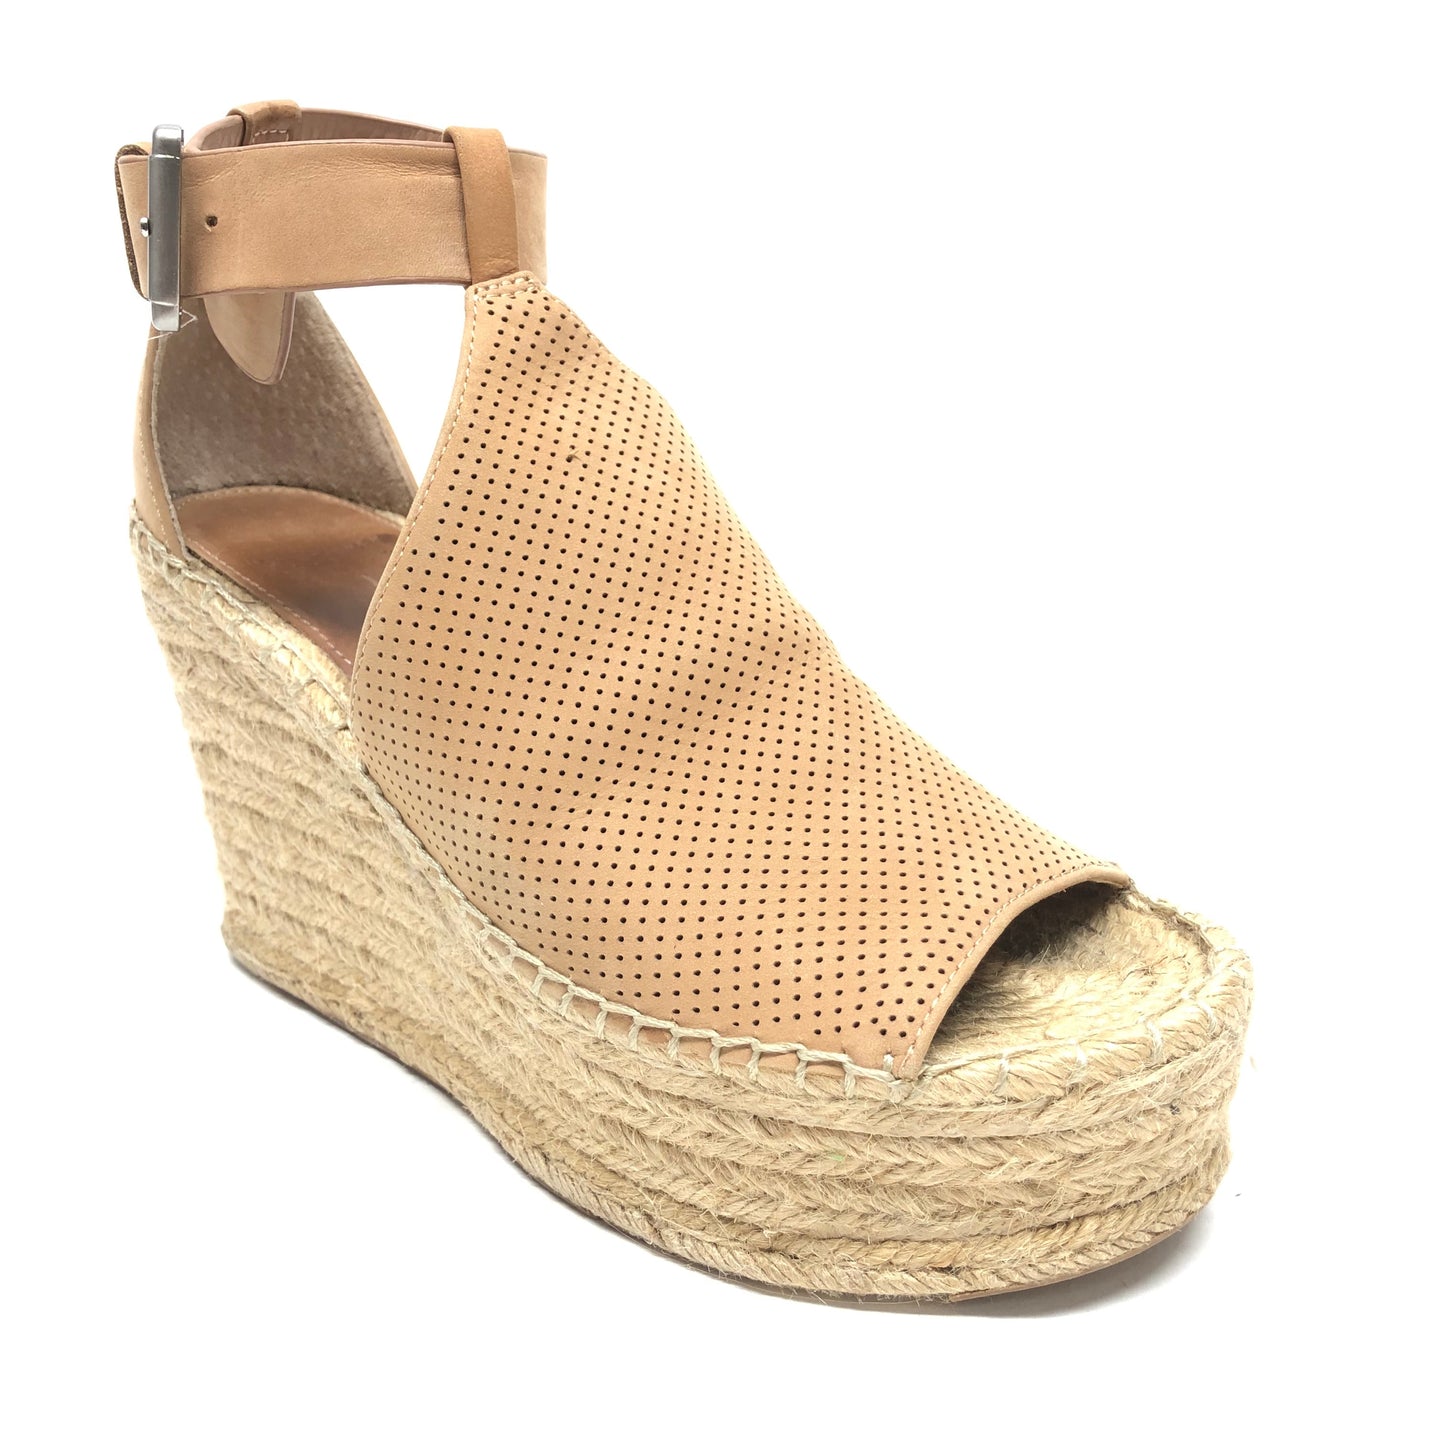 Sandals Heels Platform By Marc Fisher  Size: 8.5